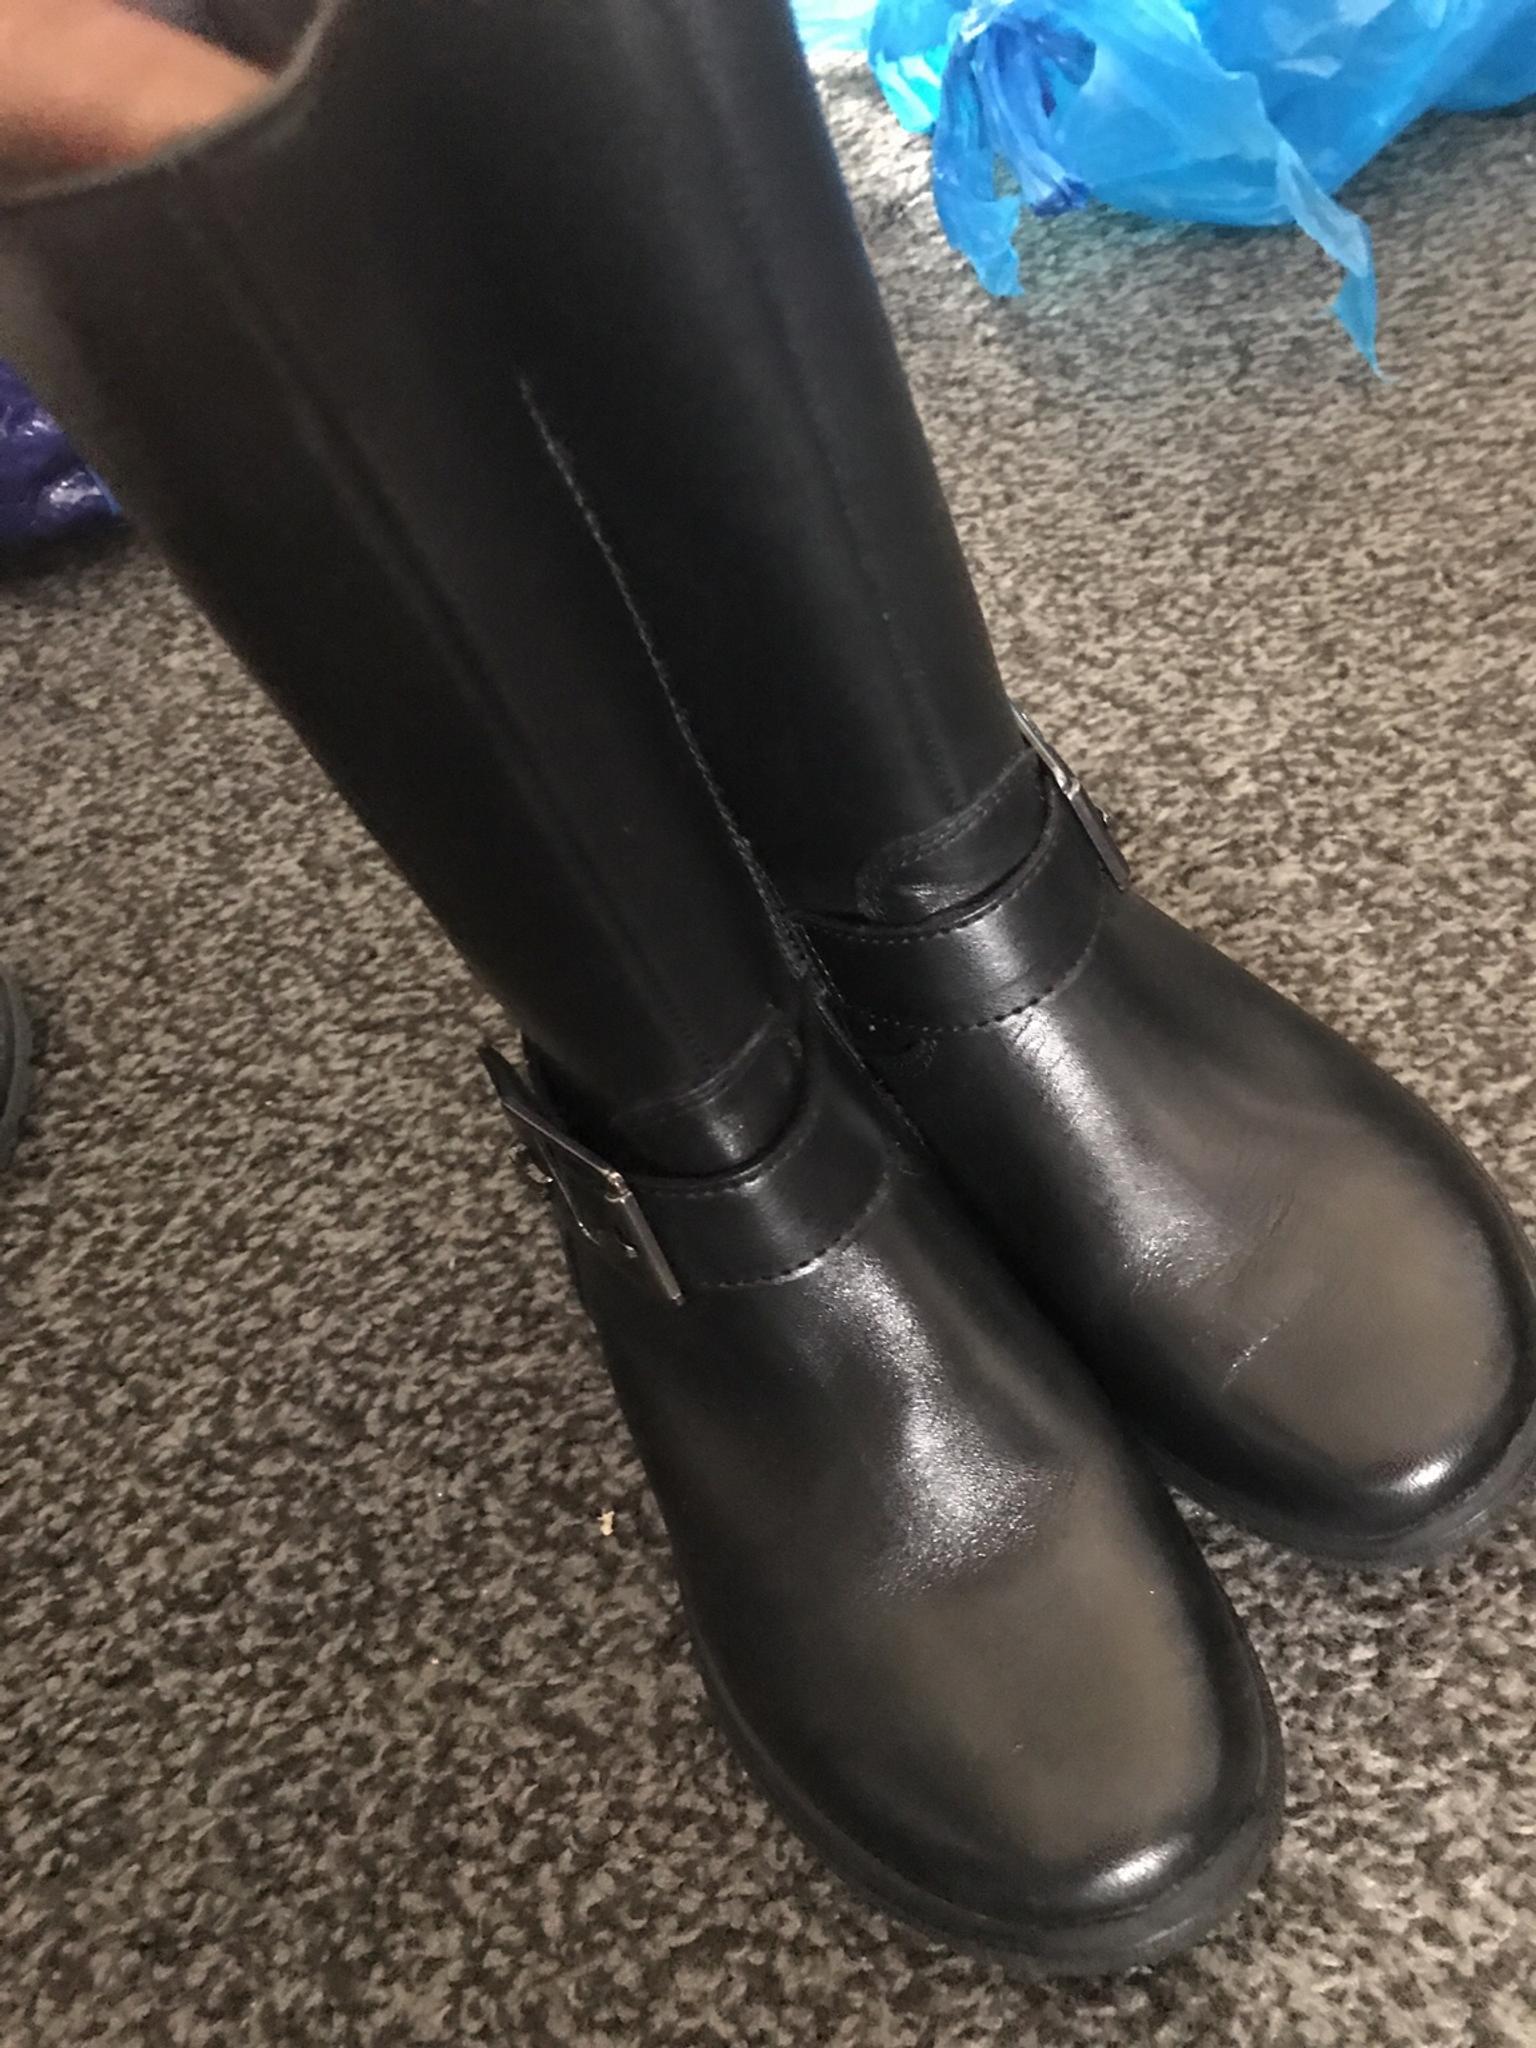 clarks girls black boots